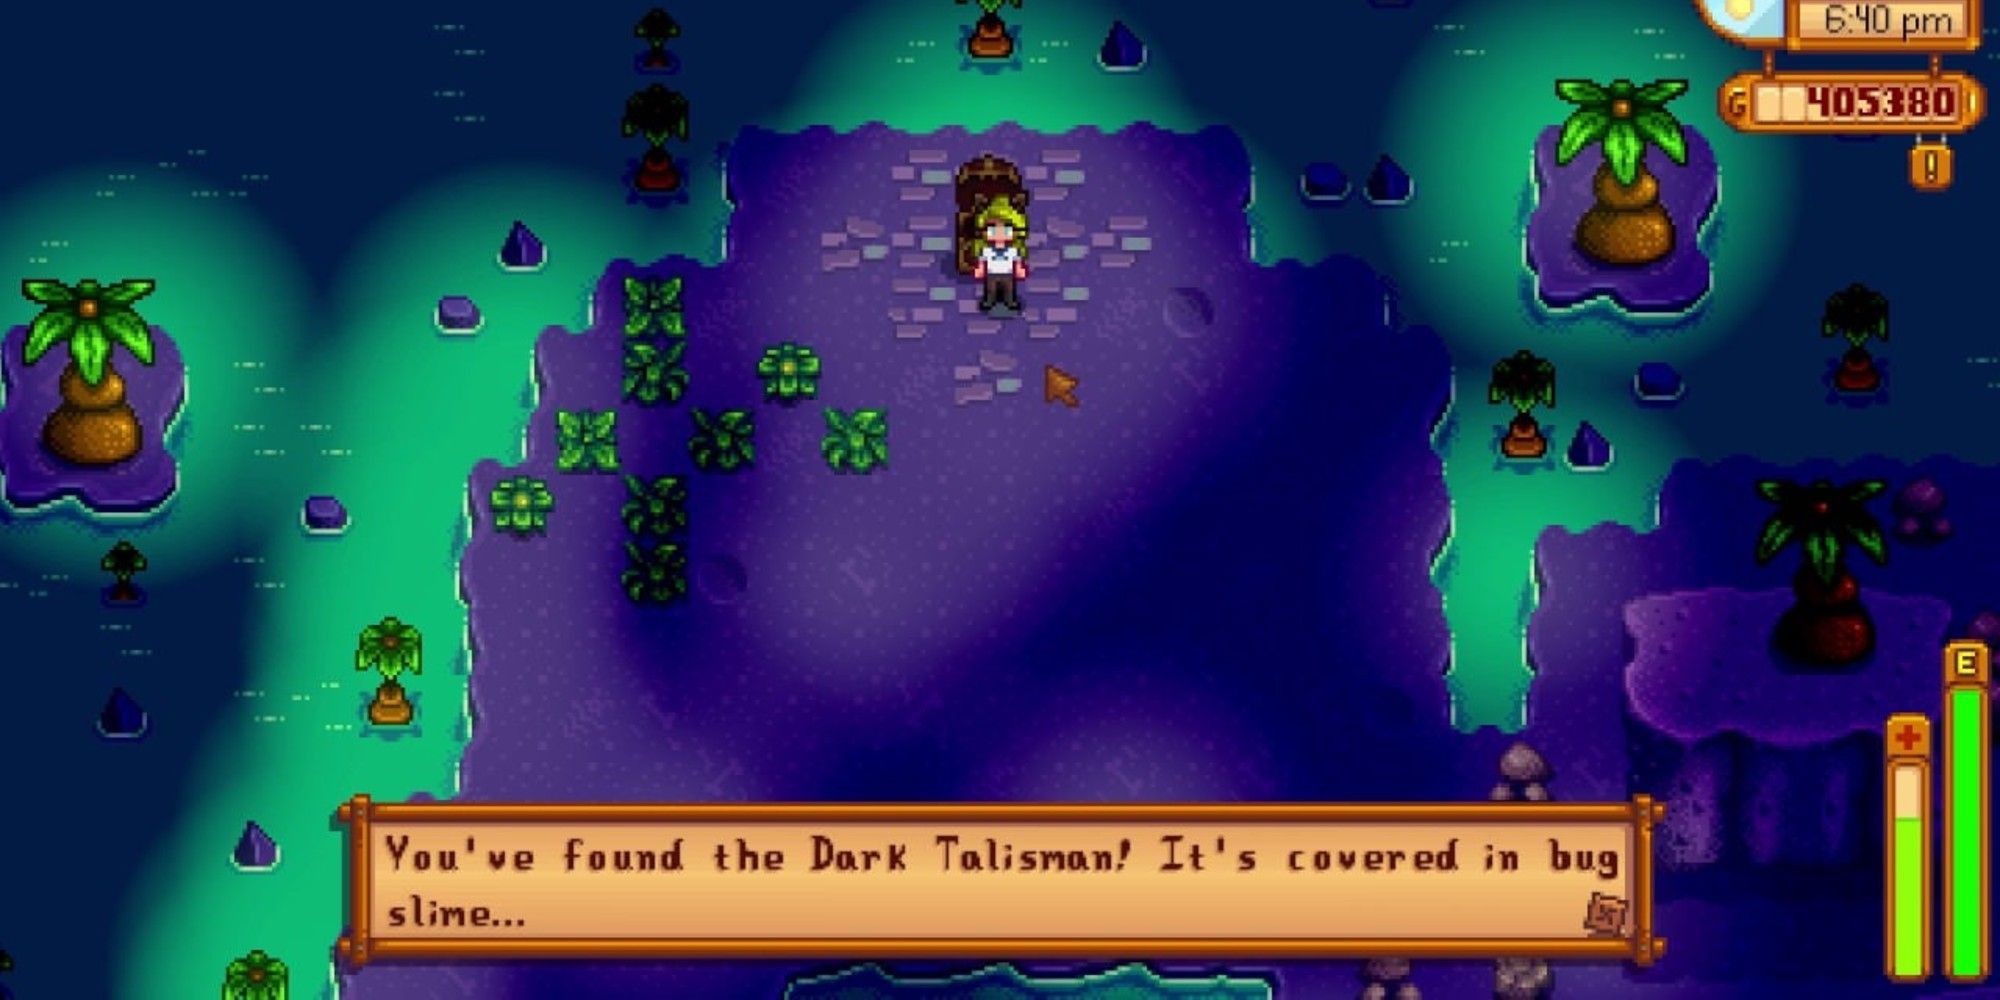 player in mutant bug lair retrieving the dark talisman